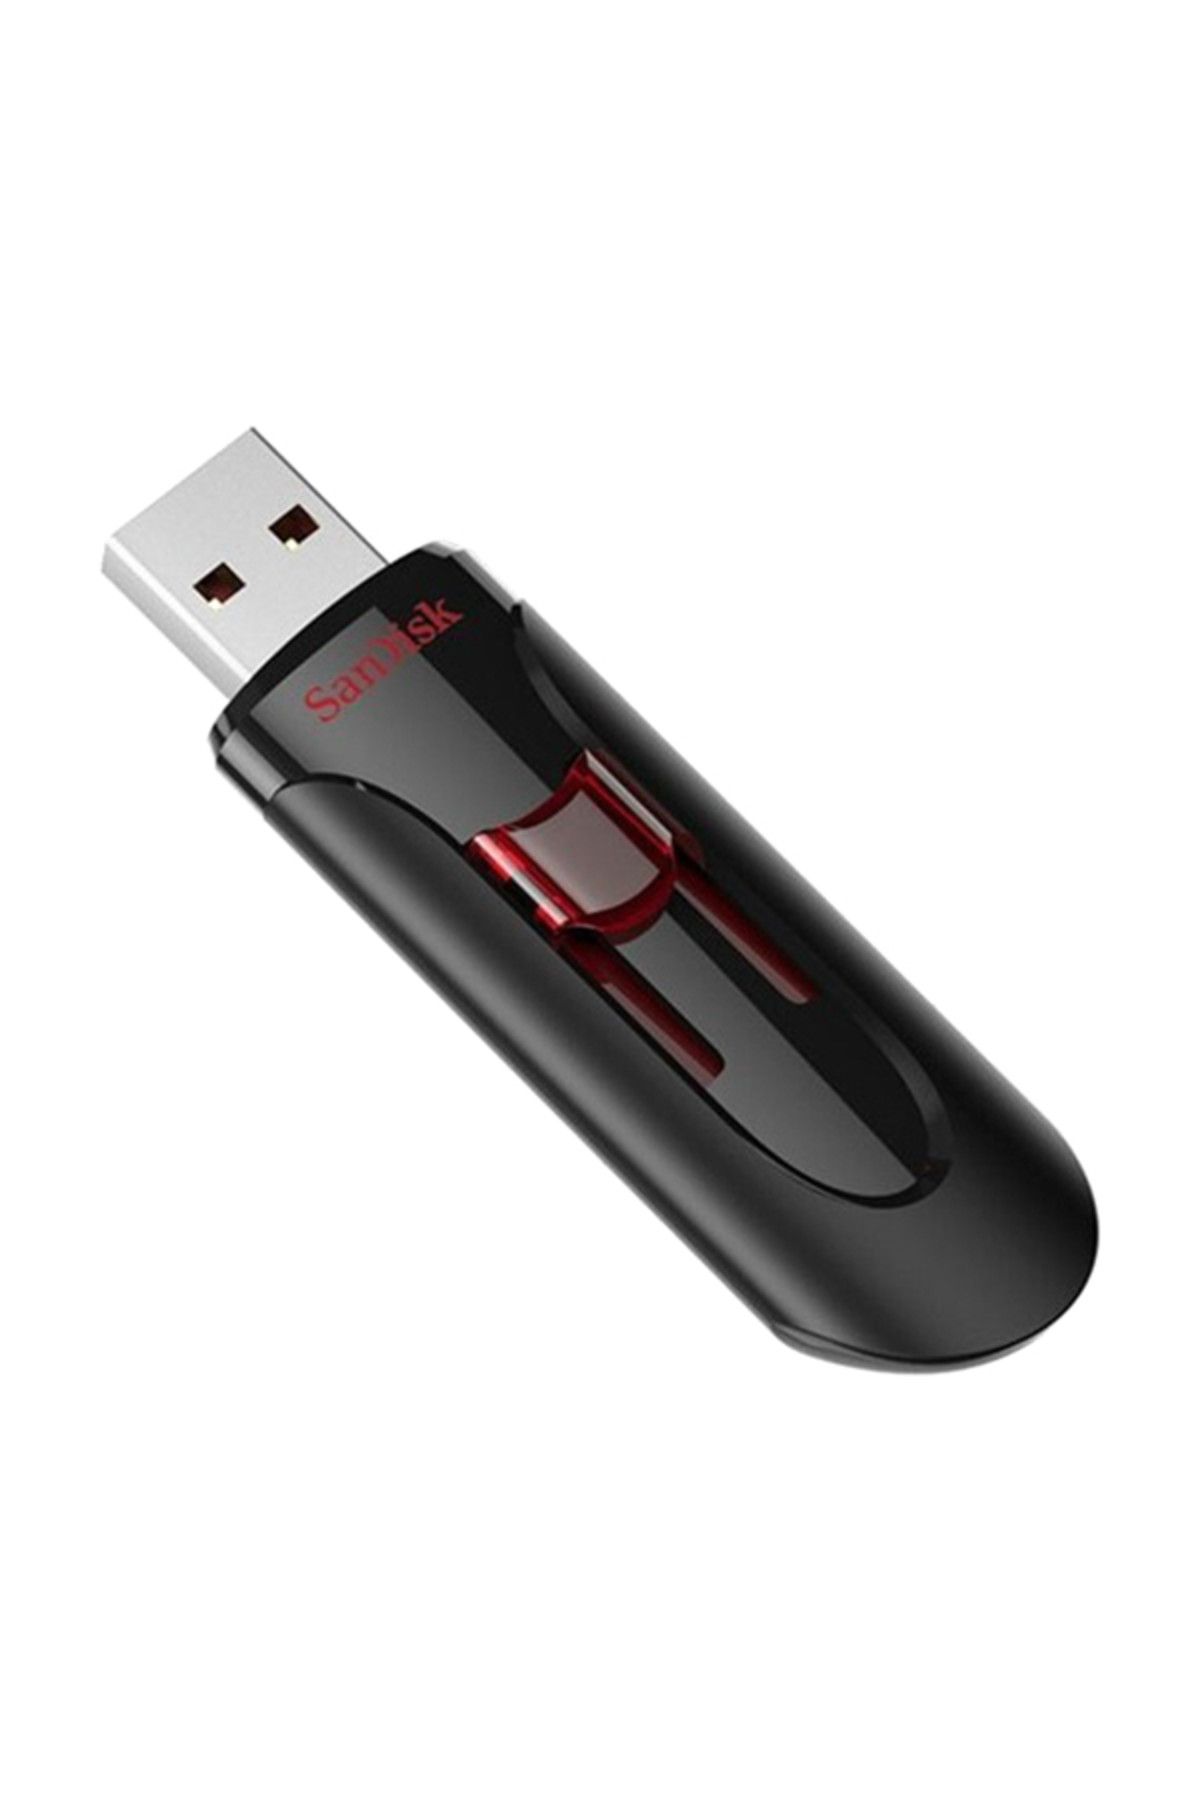 Sandisk UFM 256GB USB 3.0 USB Bellek